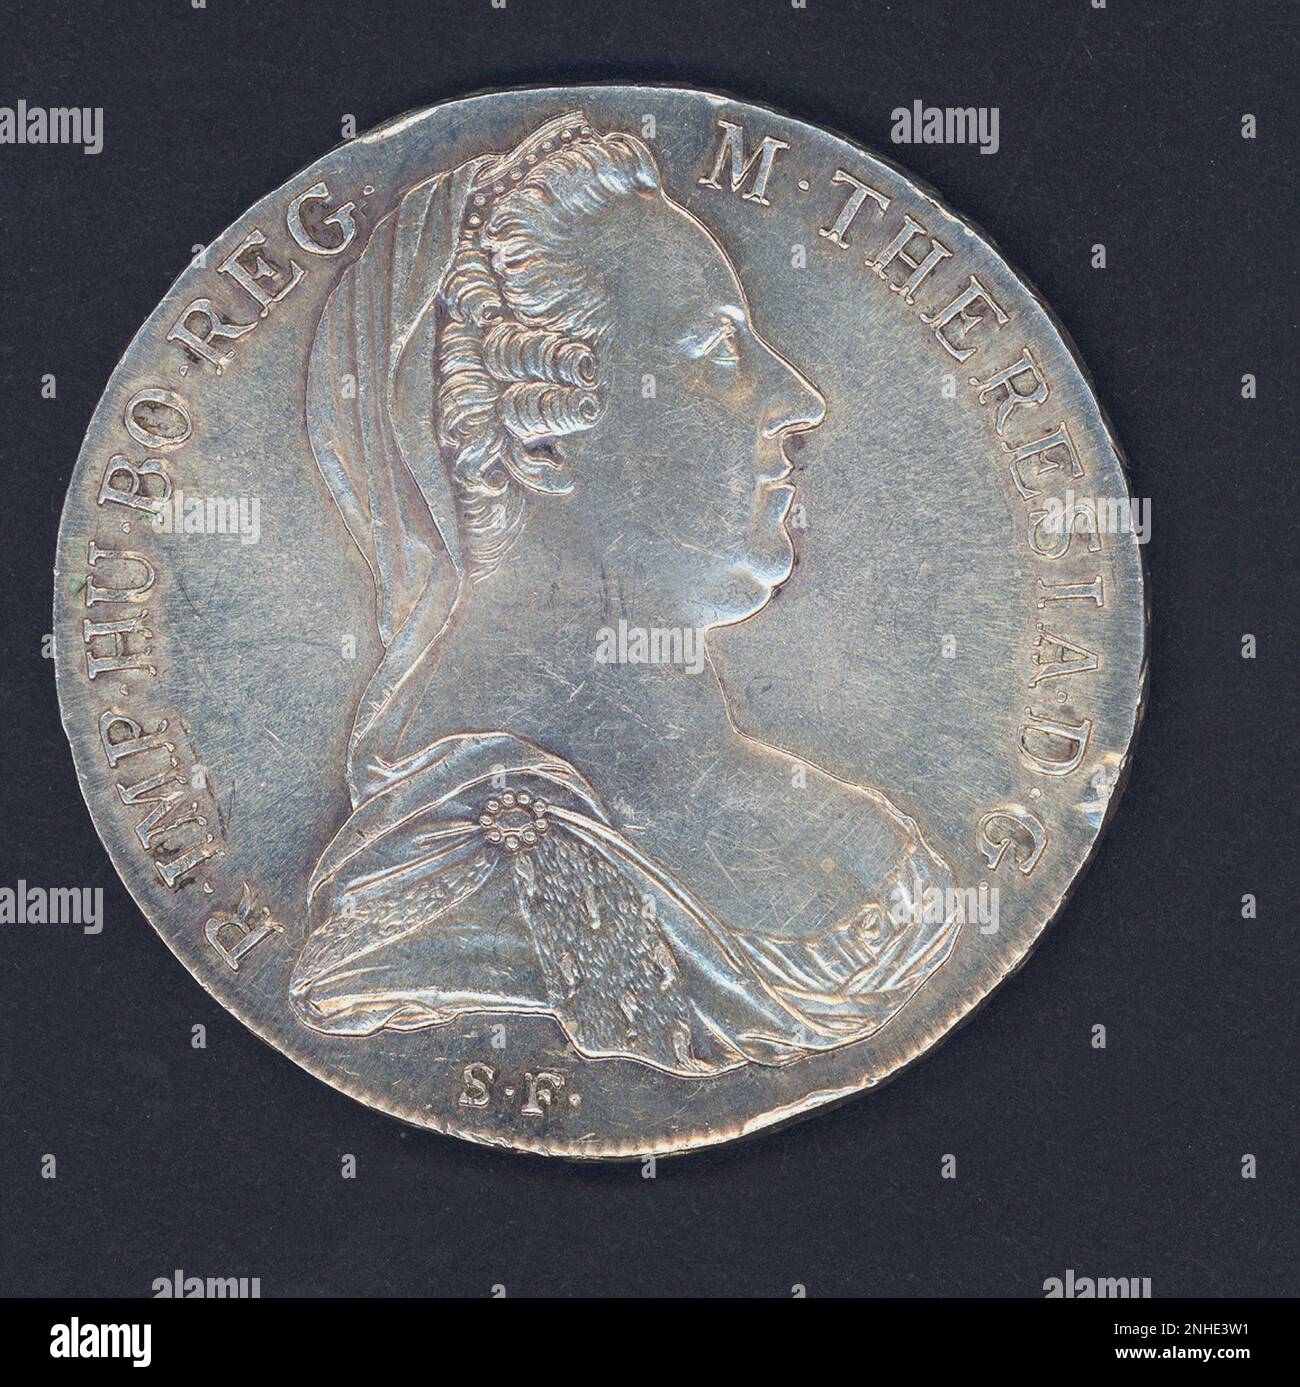 1780 , Italia : la celebrata Imperatrice Kaiserin MARIA THERESIA (Terezie, Wien 1717 - 1780), Regina d'Ungheria e Boemia, Moneta unica Tallero - ASBURGO - ASBURGO - ABSBURG - ABSBURGO - ABSBURG - ASBURG - Impero Austro-Ungarico - TERESA - corona - corona - TALLER - moneta - numismatica - numismatica - profilo - profilo - IMPERATRICE - gioielli - gioielleria - famiglia - fiore - Ritratto - real austriaci - royalty austrian - nobili - nobiltà - nobiltà - BOURBON - AUSTRIA - LOMBARDIA - LOMBARDIA ---- Archivio GBB Foto Stock